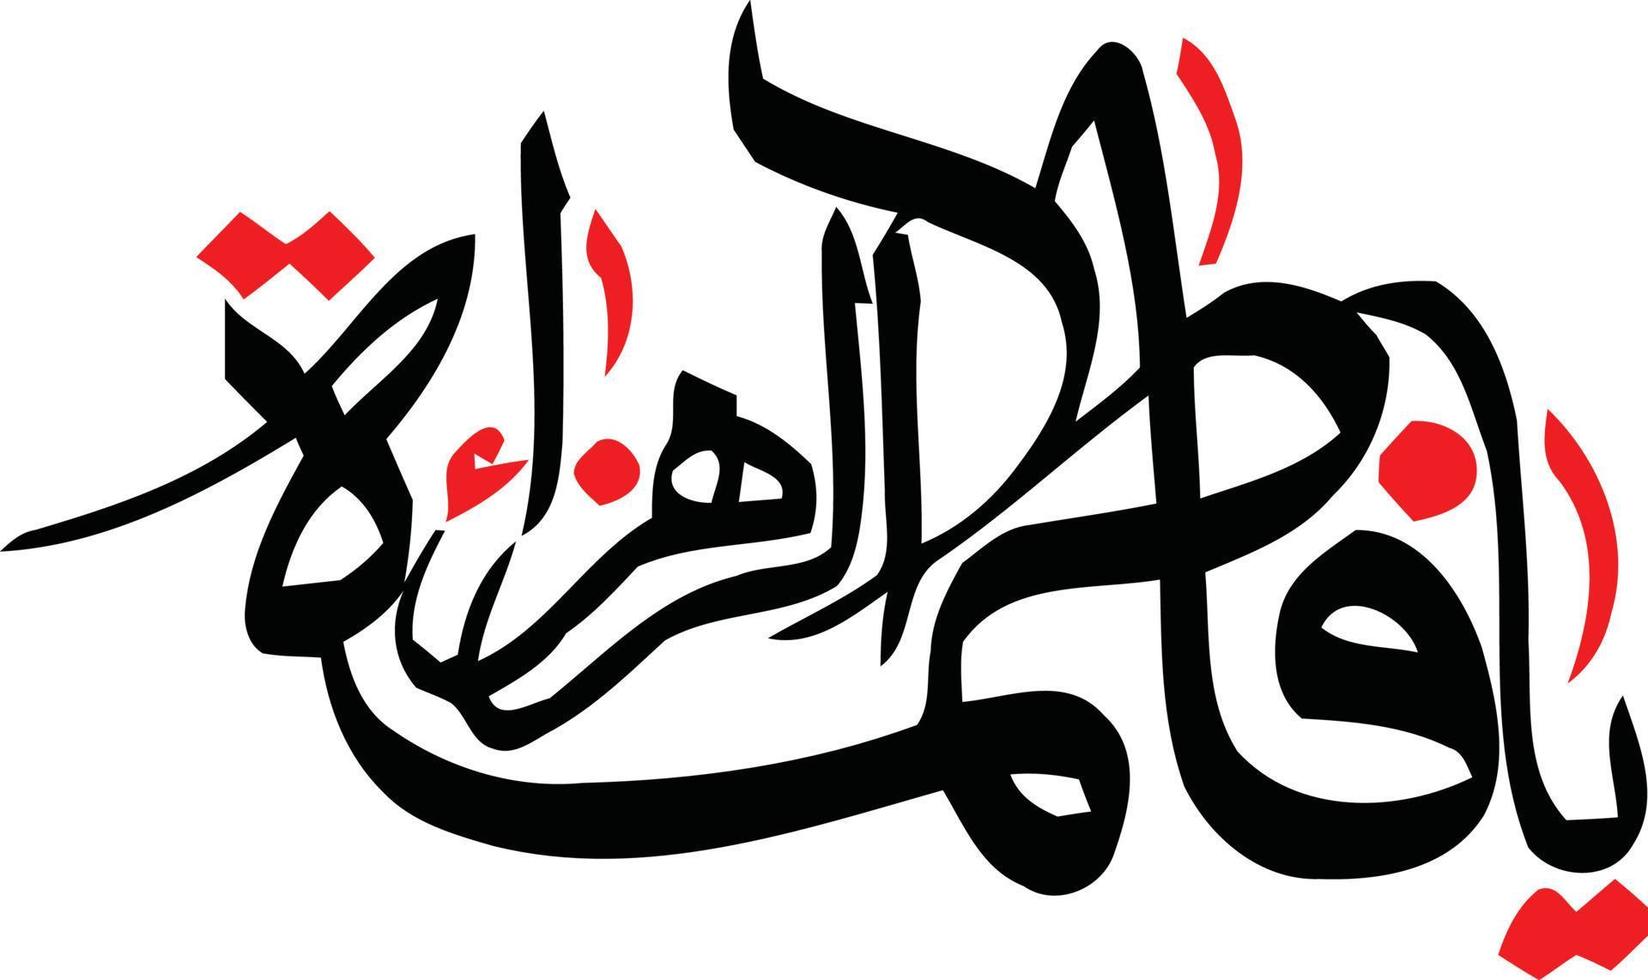 ya fatima alzhara título vetor livre de caligrafia árabe urdu islâmica